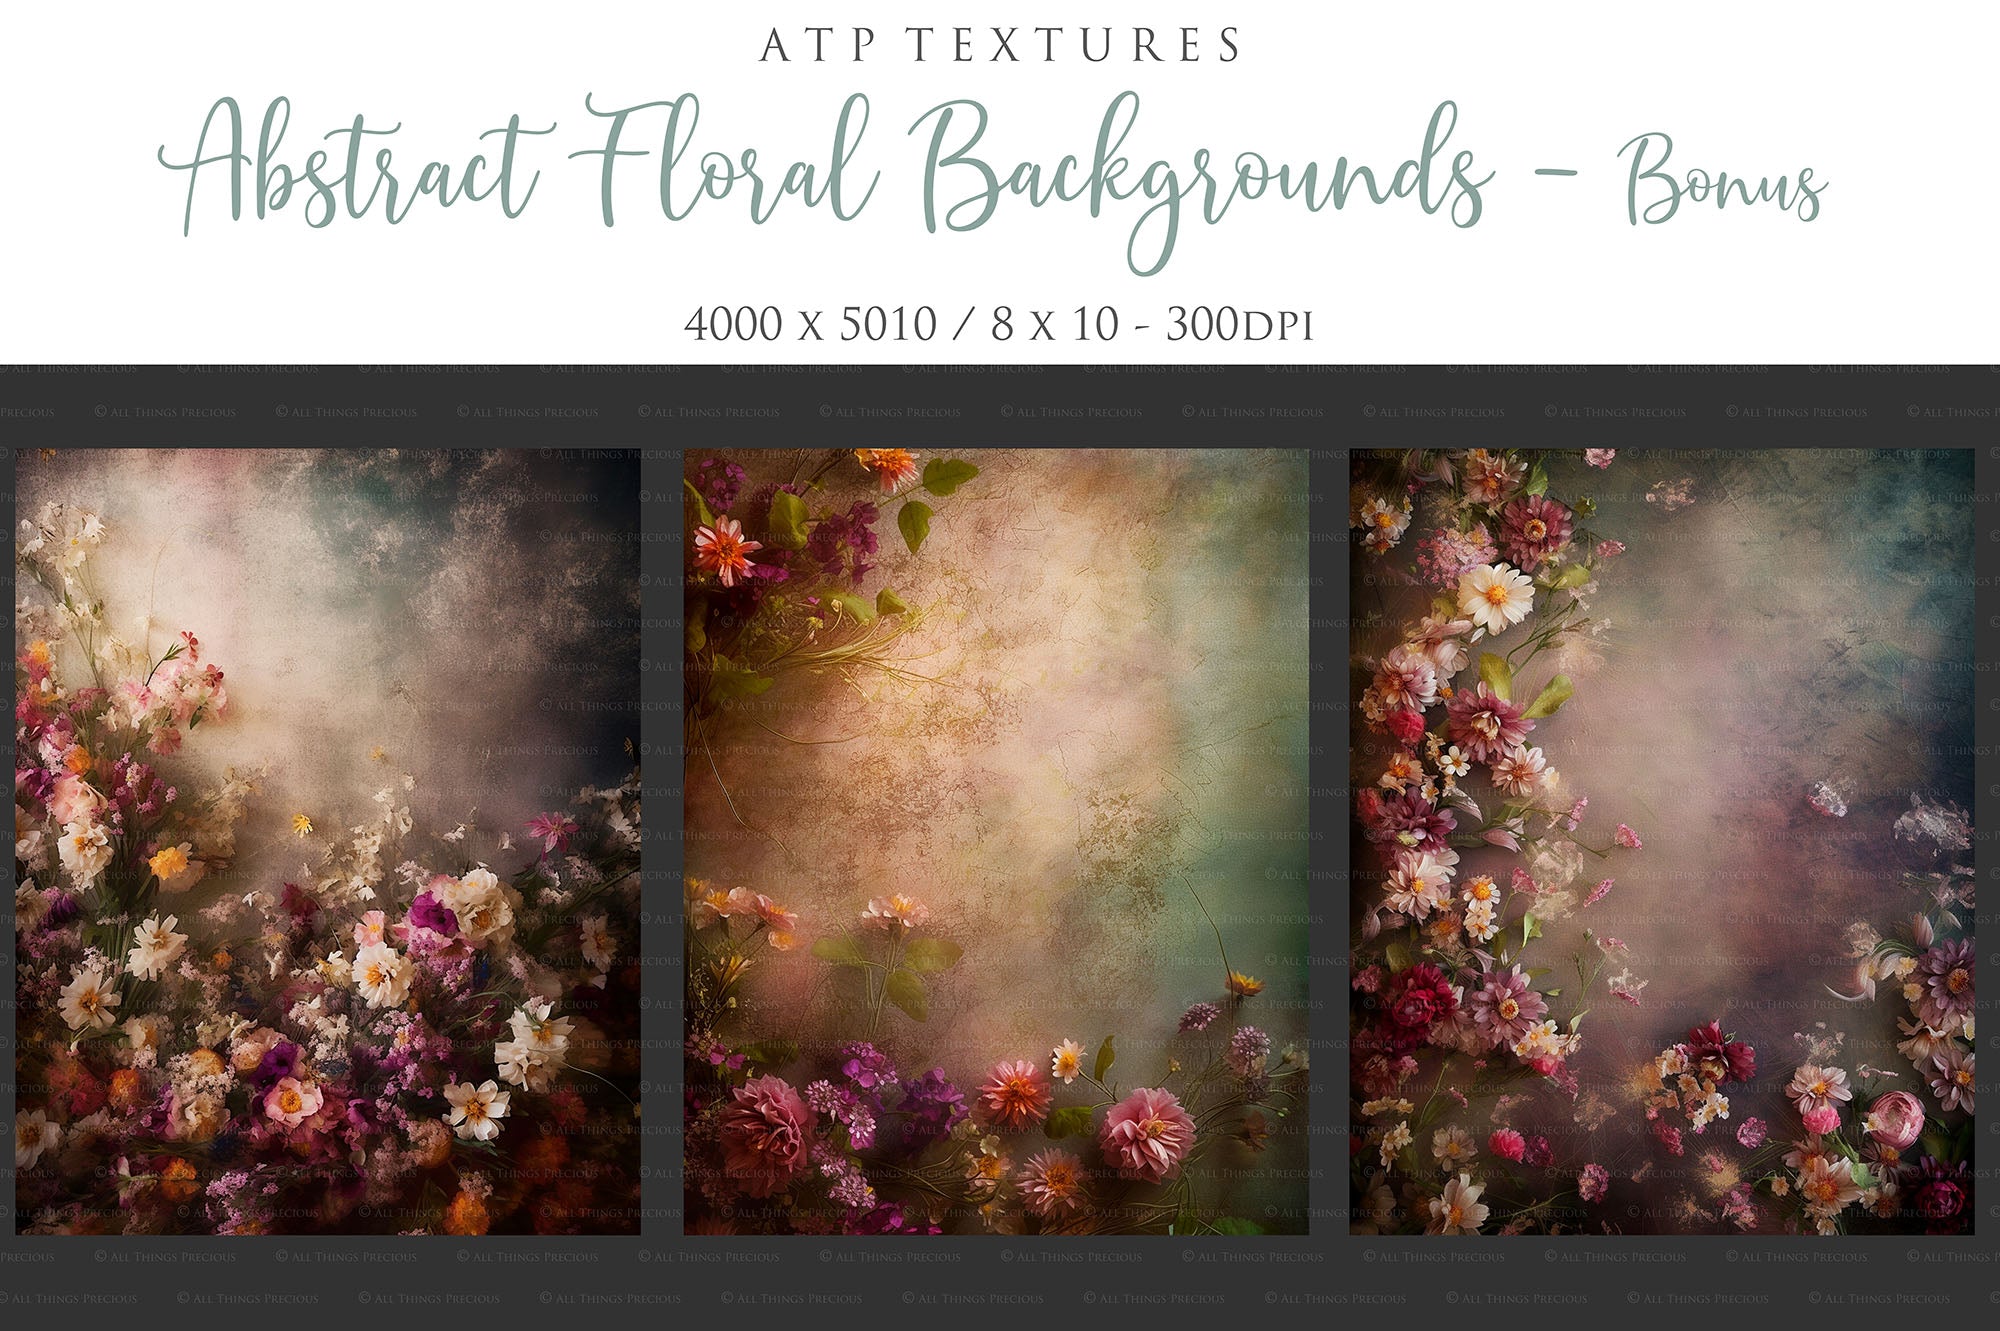 12 ABSTRACT Floral Backgrounds / DIGITAL BACKDROPS - Set 3